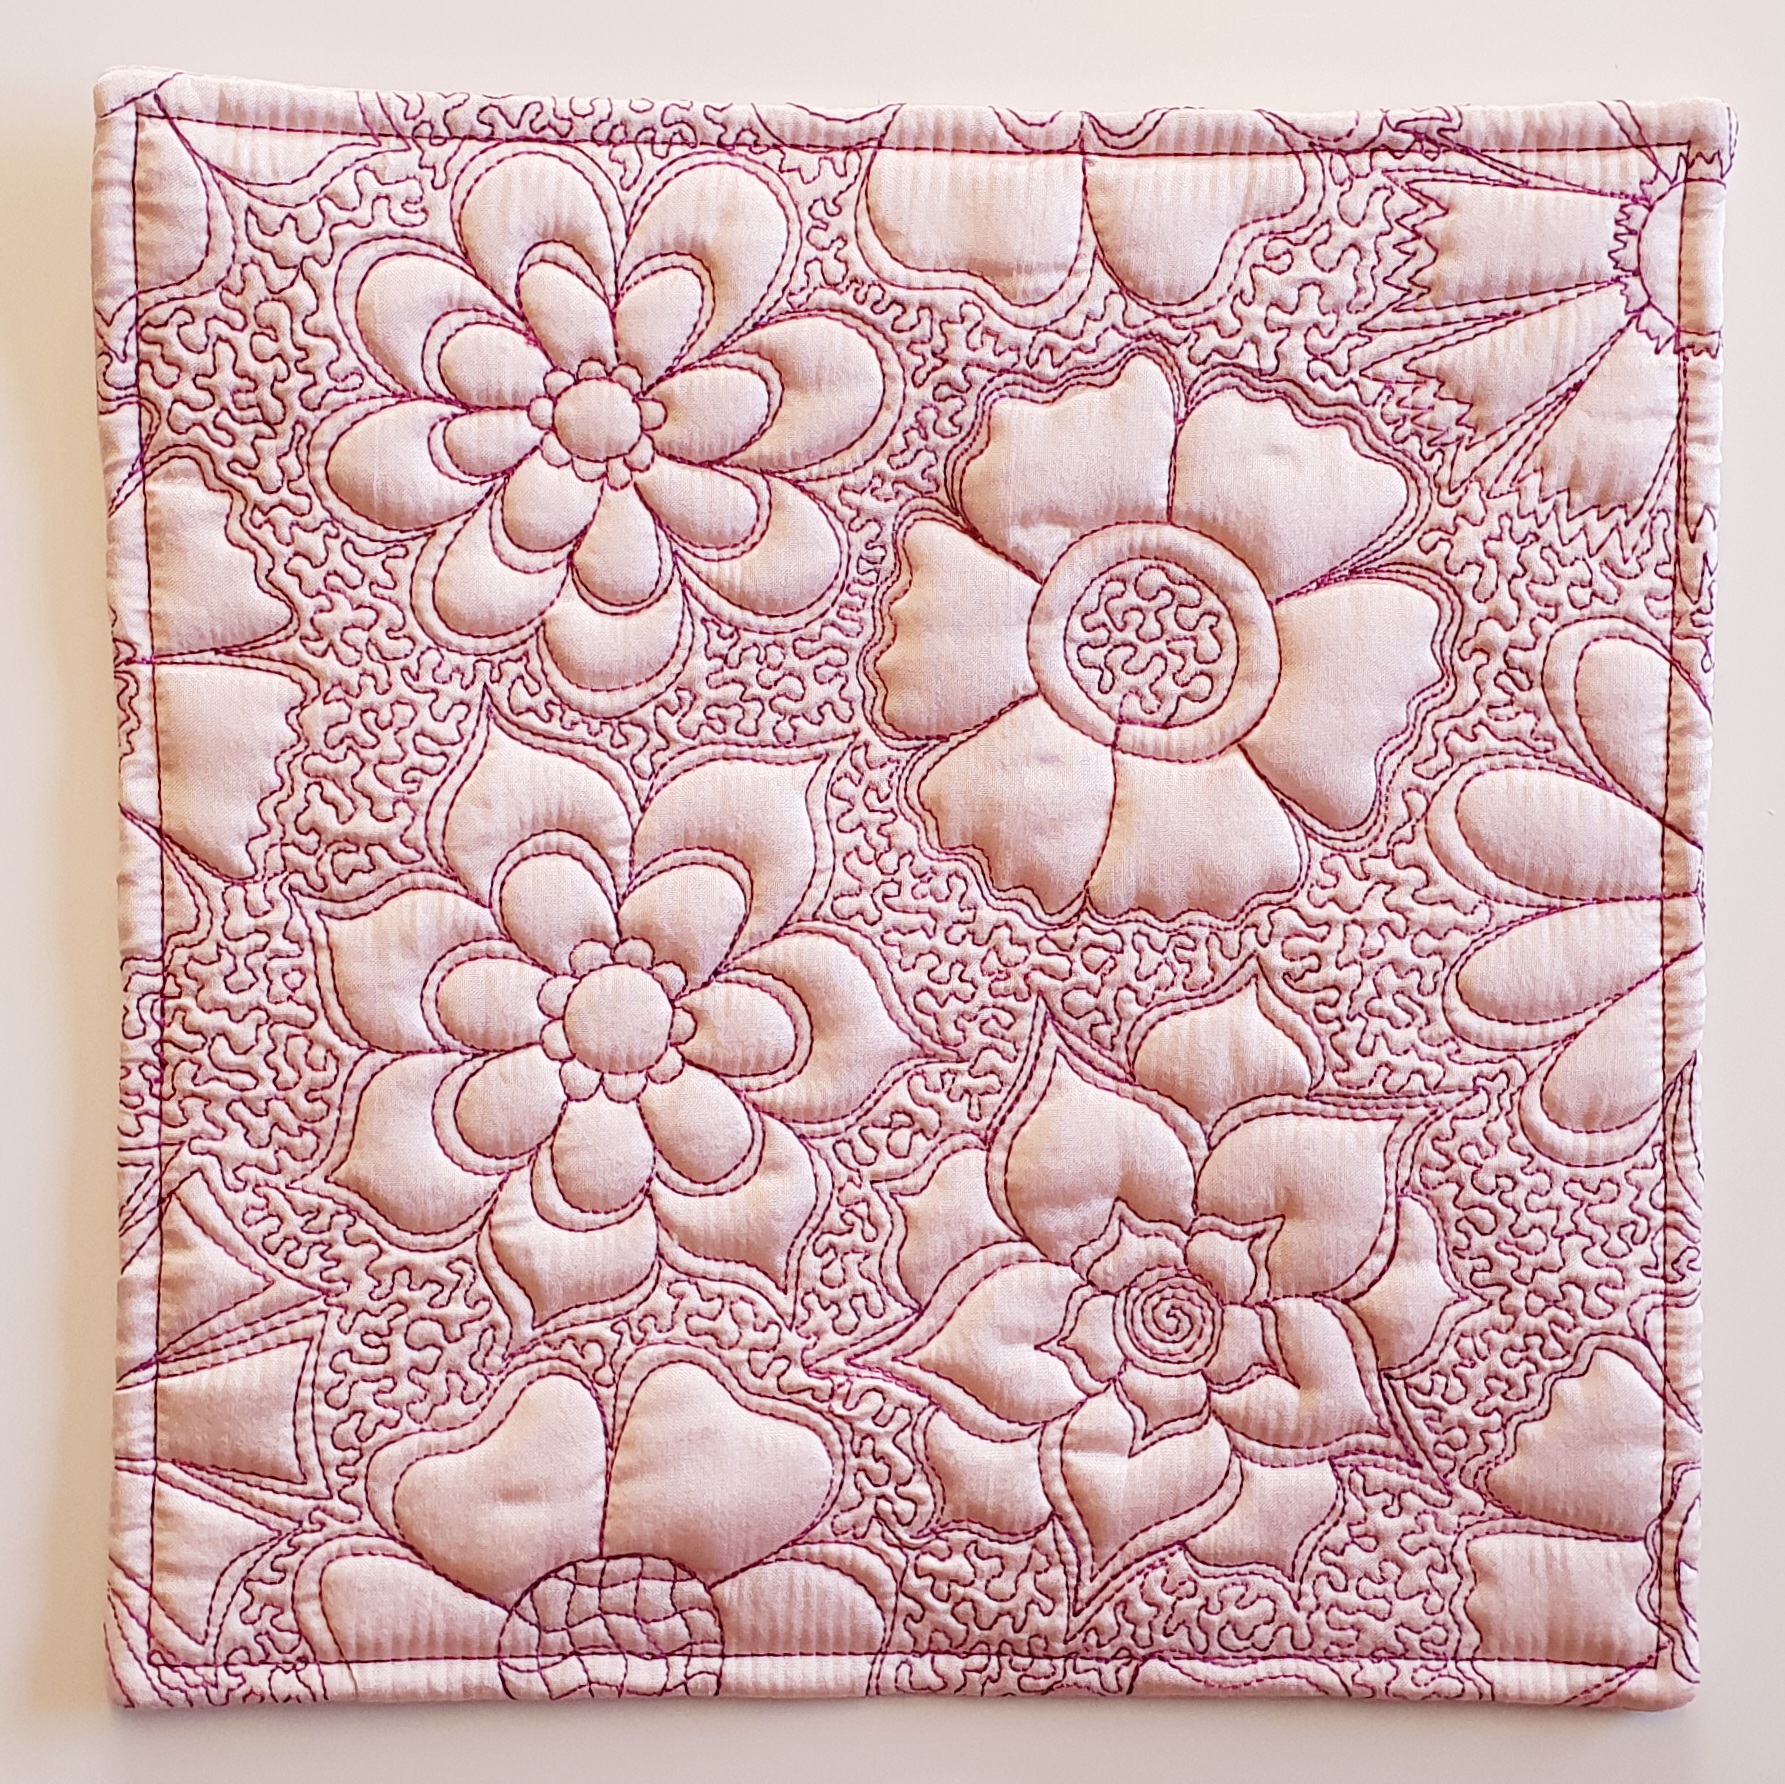 "Pink Lace" Silk Mini Quilt